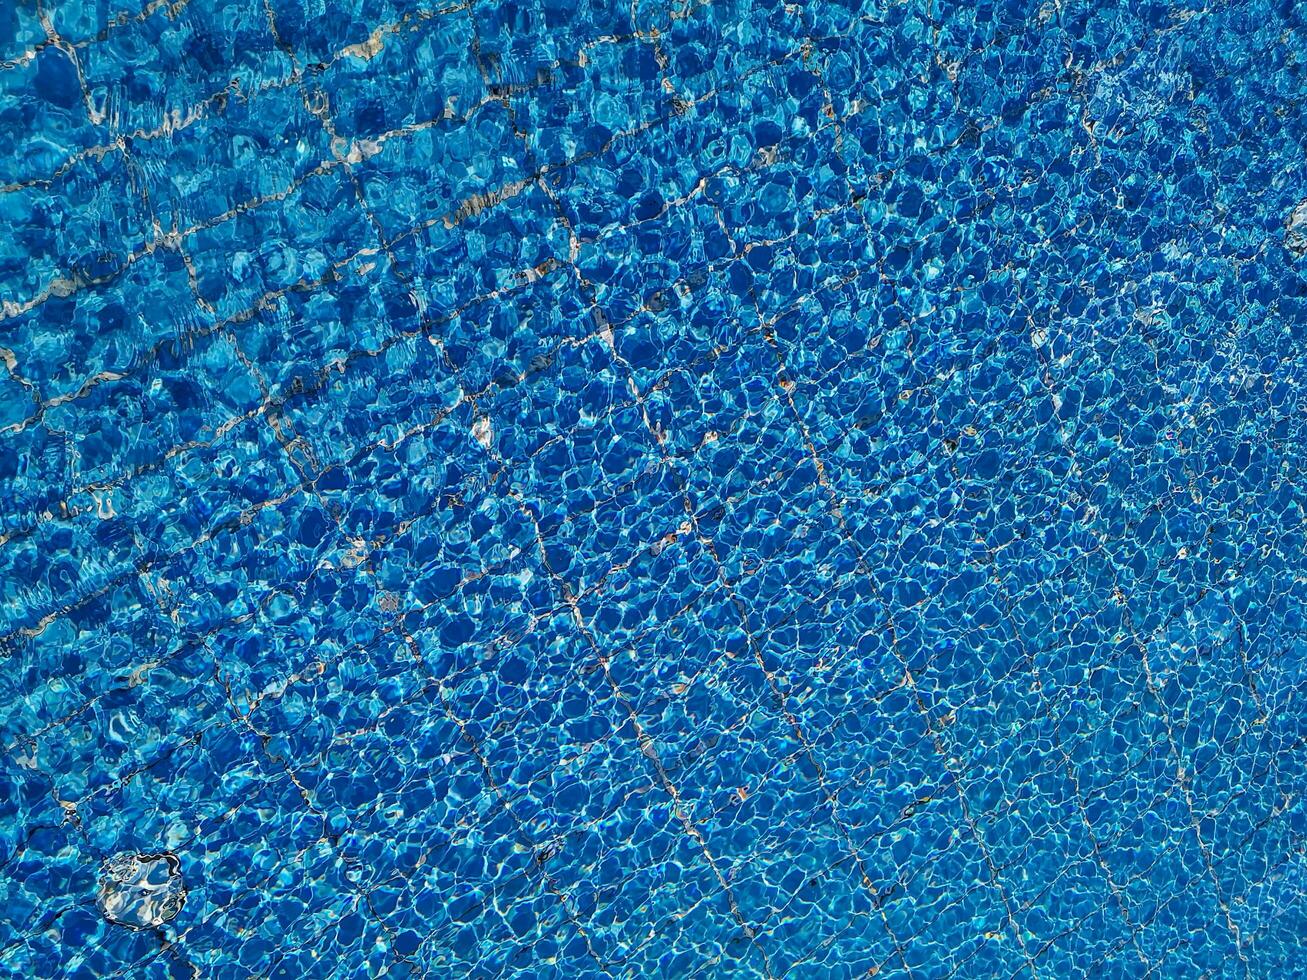 bleu l'eau ondulation dans nager bassin avec Soleil reflets photo